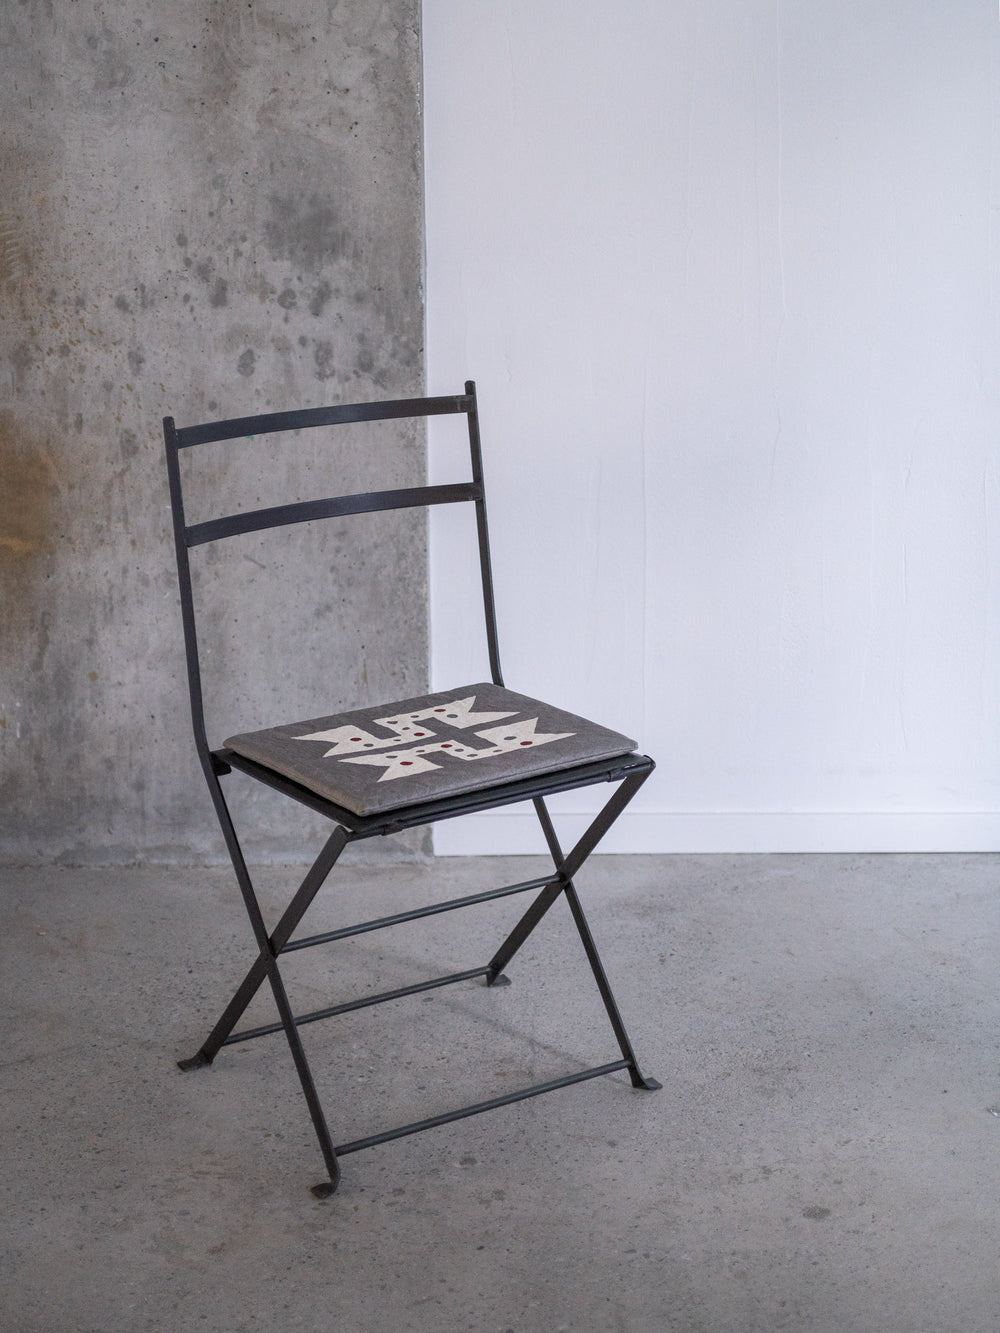 Washi Kakuza Paper Cushion – Design 3 Grey